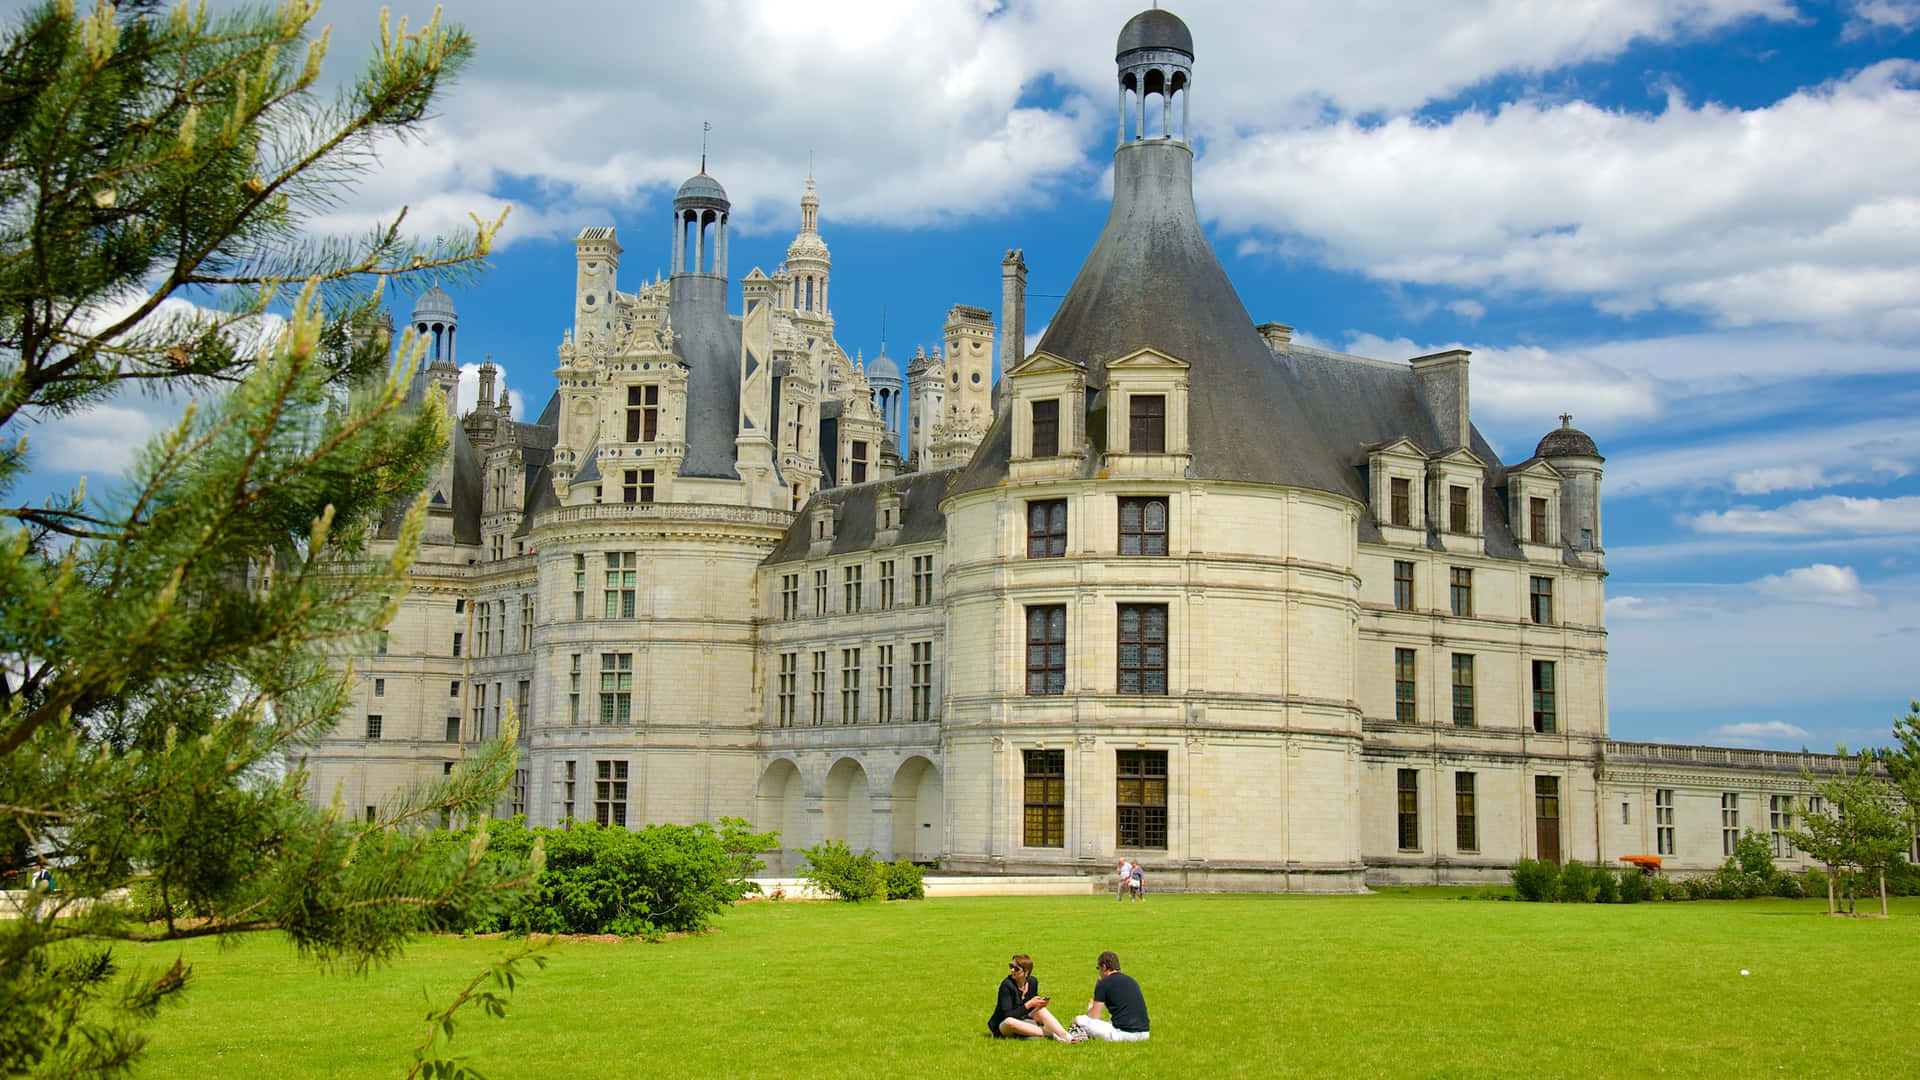 Caption: Majestic Chateau De Chambord, the Largest Castle in the Loire Valley Wallpaper